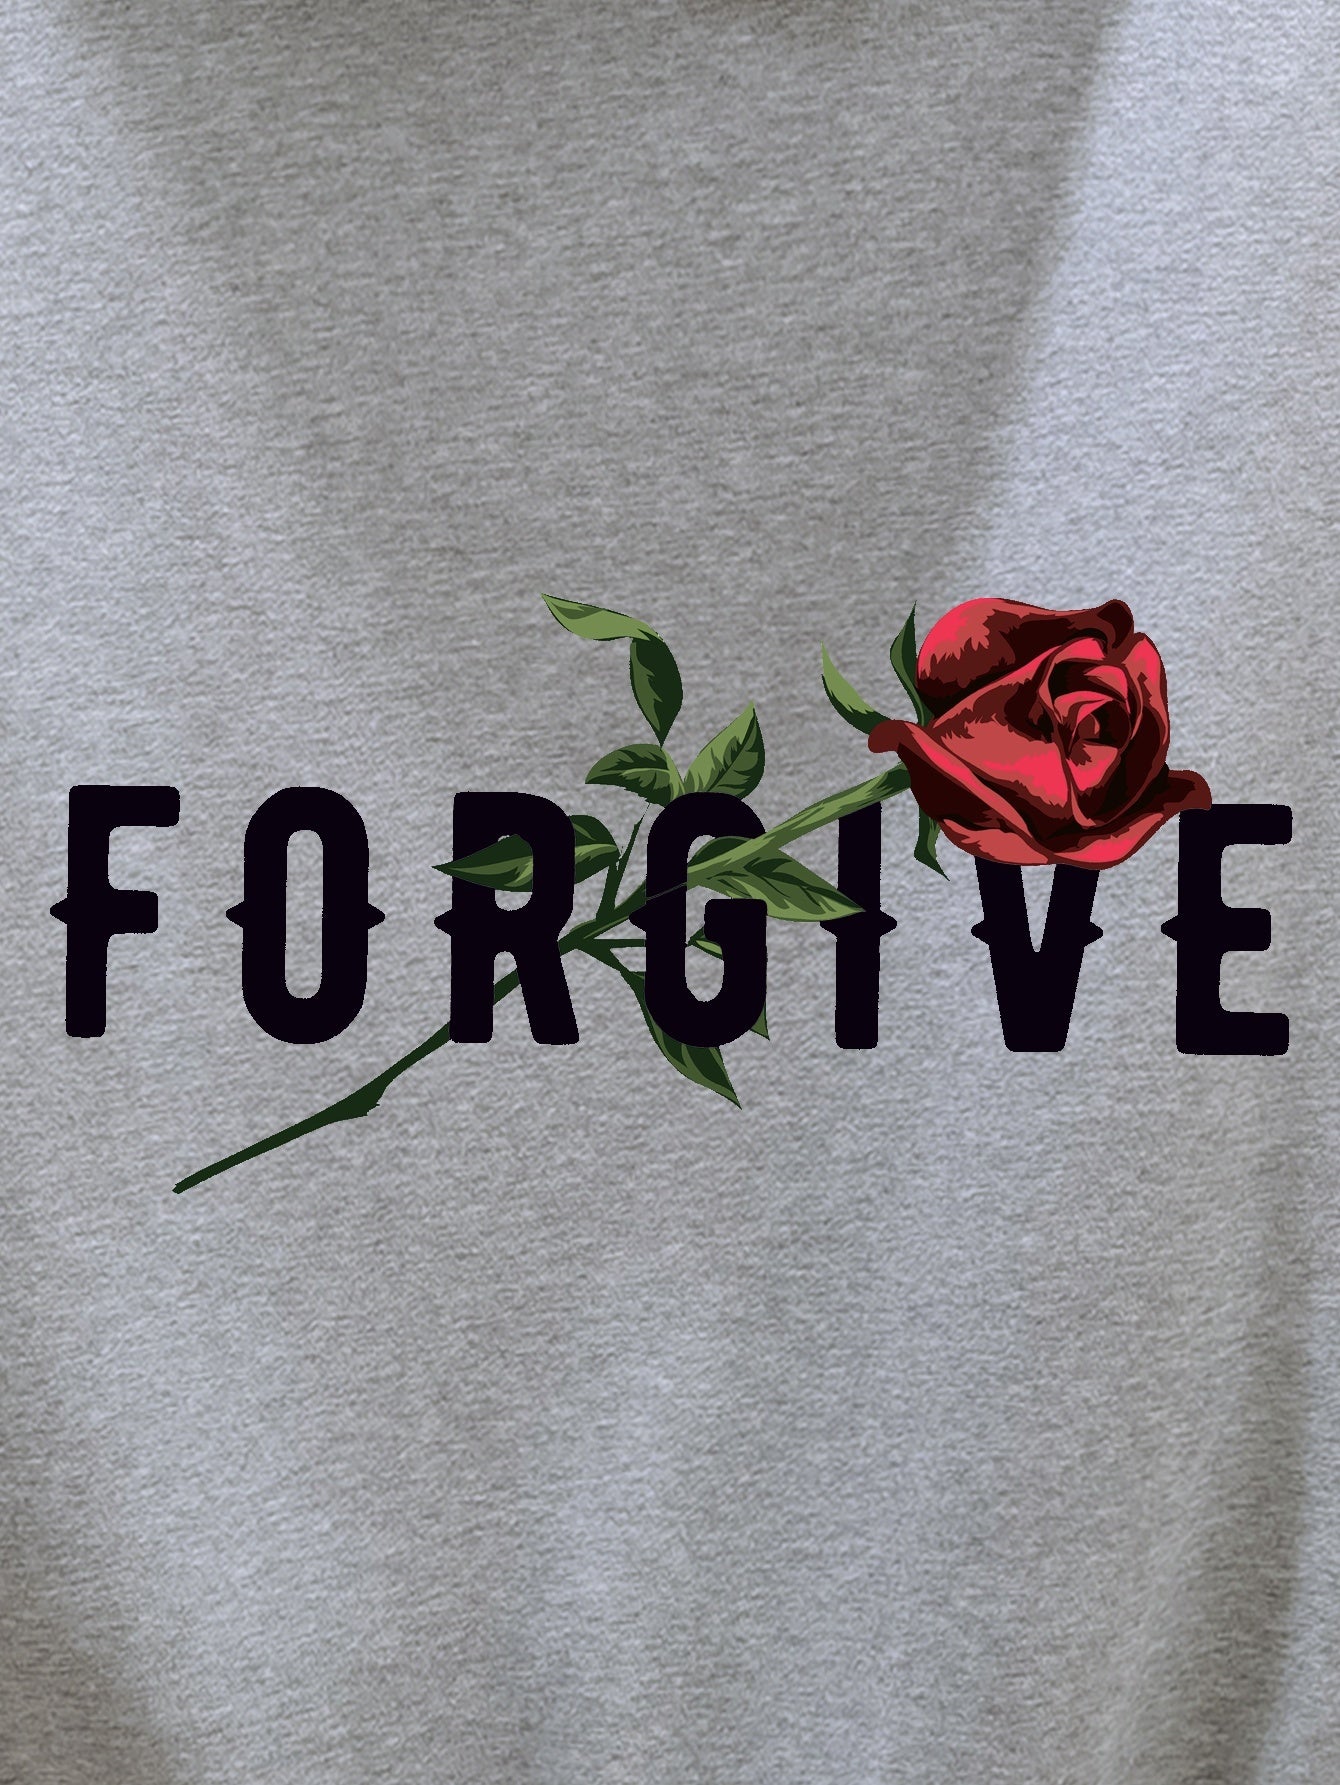 FORGIVE (Rose) Unisex Pullover Hooded Sweatshirt claimedbygoddesigns